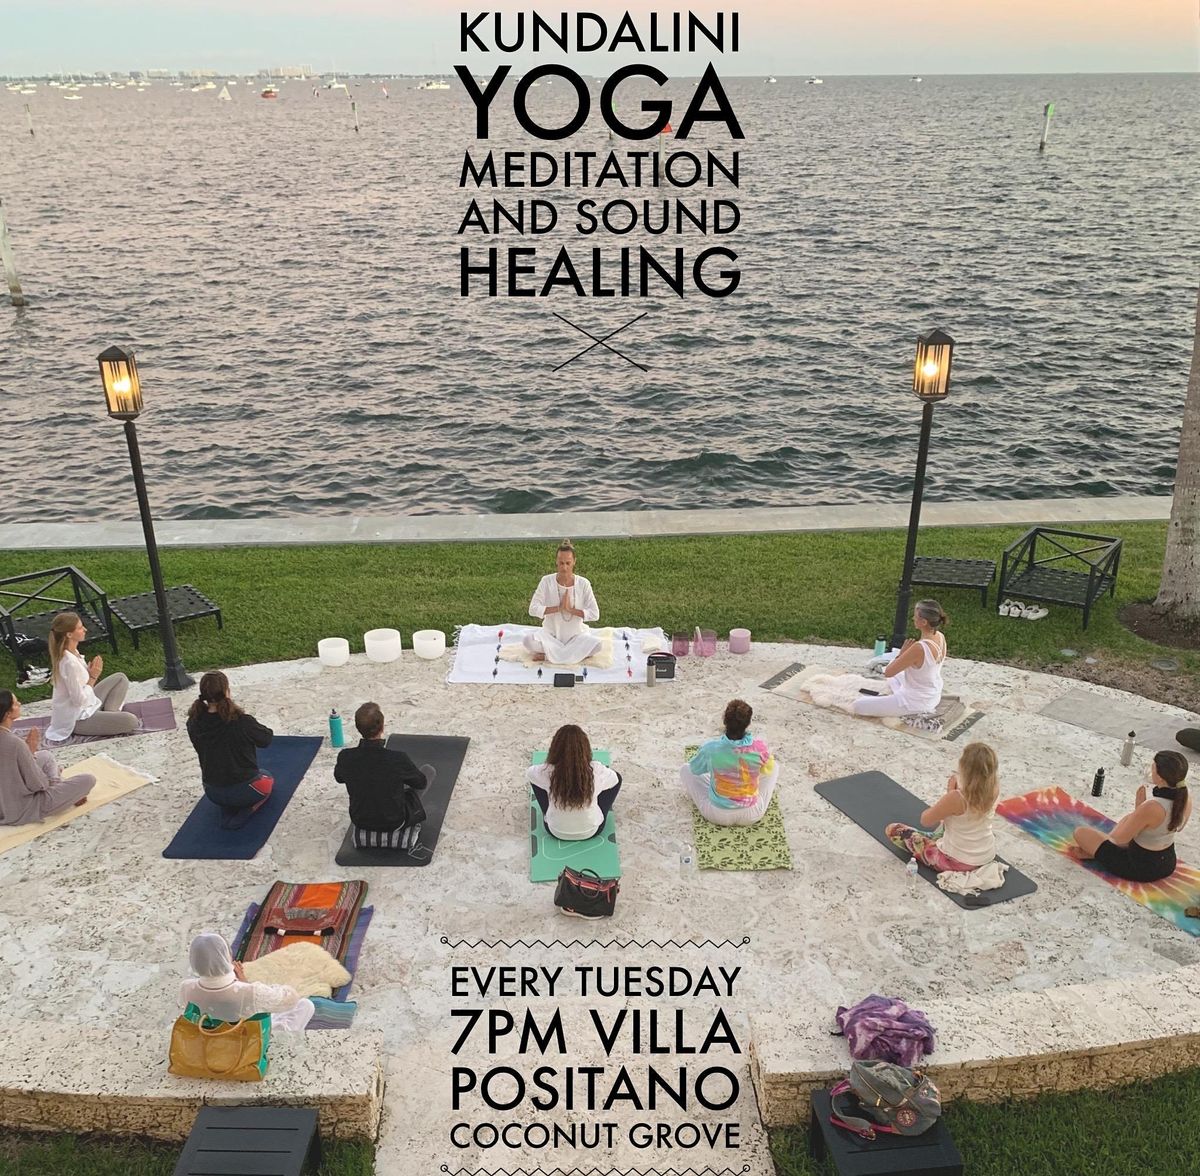 KUNDALINI YOGA MEDITATION AND SOUND HEALING